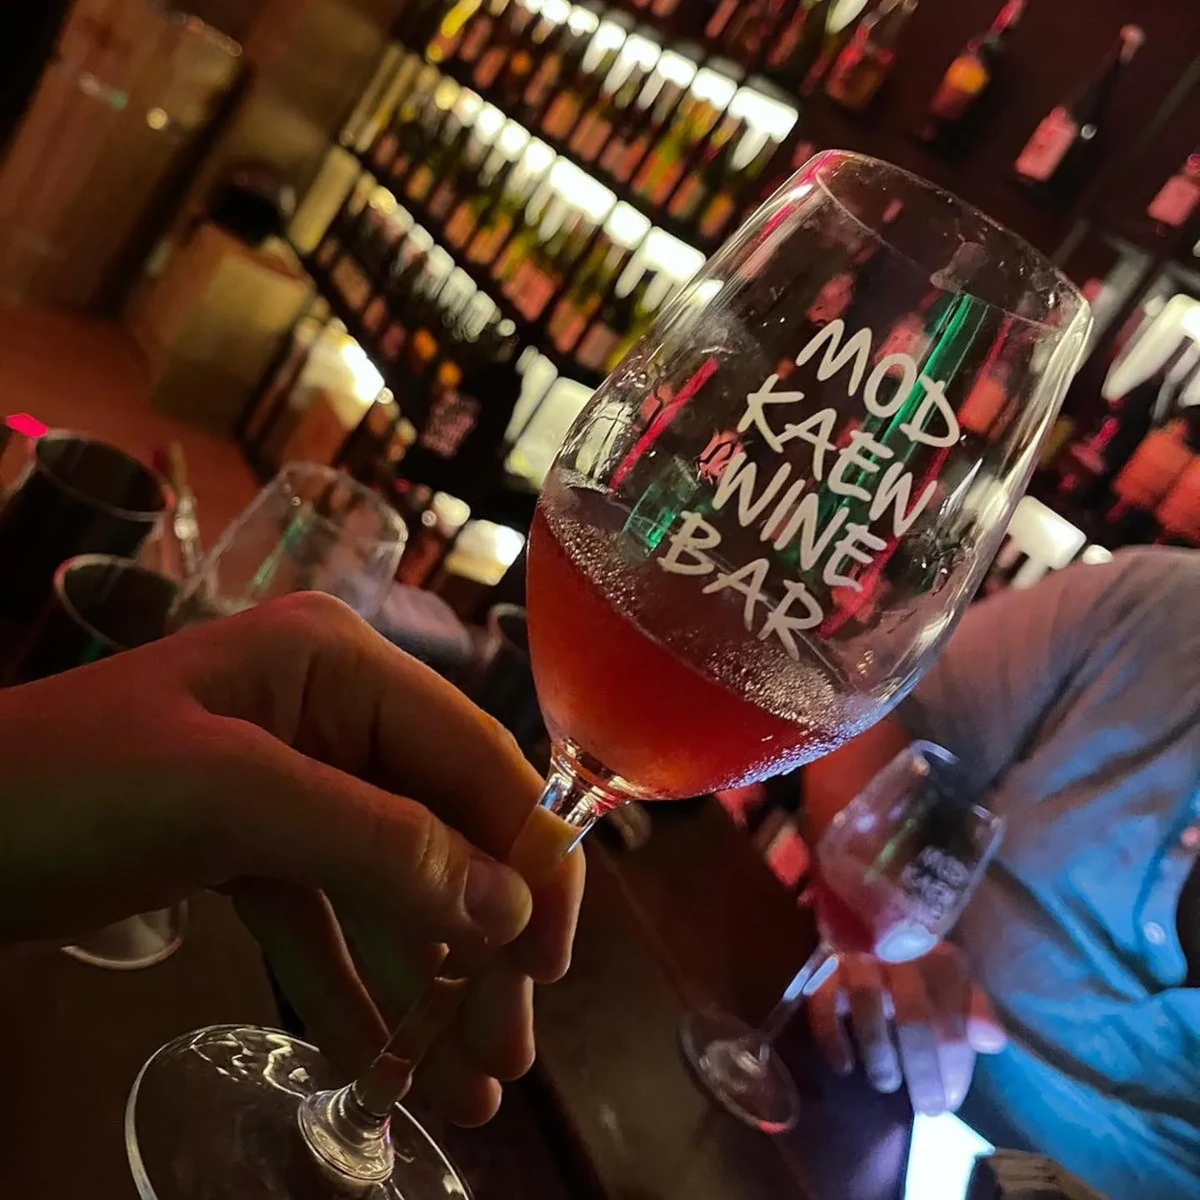 Elegant wine glasses at Mod Kaew Wine Bar in Bangkok, Thailand.